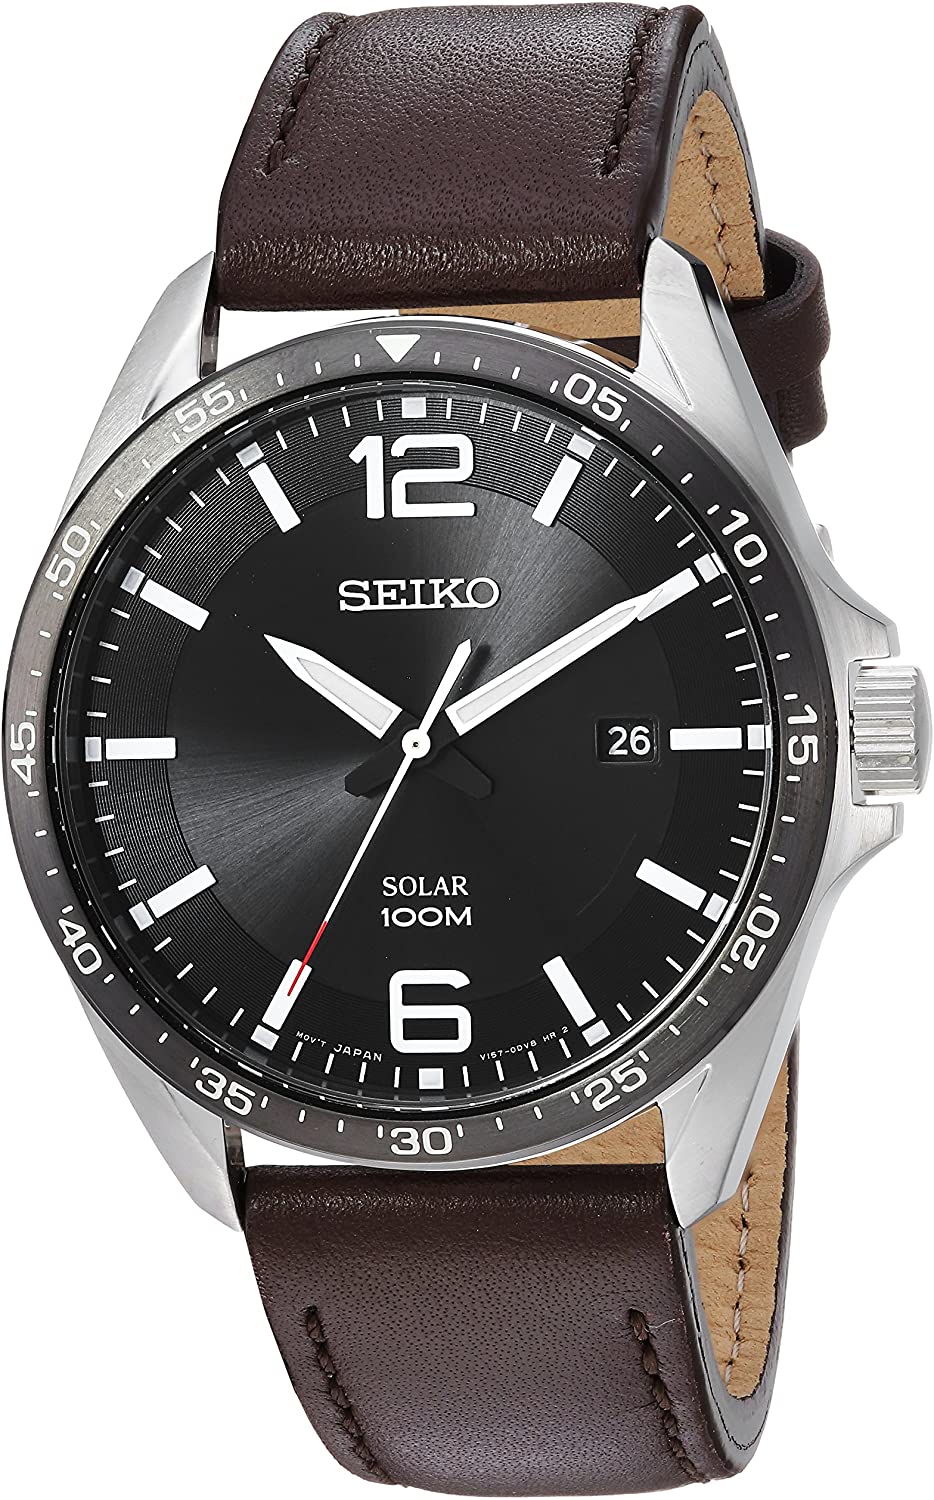 Seiko Men's Sport Watches Stainless Steel Japanese-Quartz Leather Calfskin Strap, Brown, 22 (Model: SNE487)